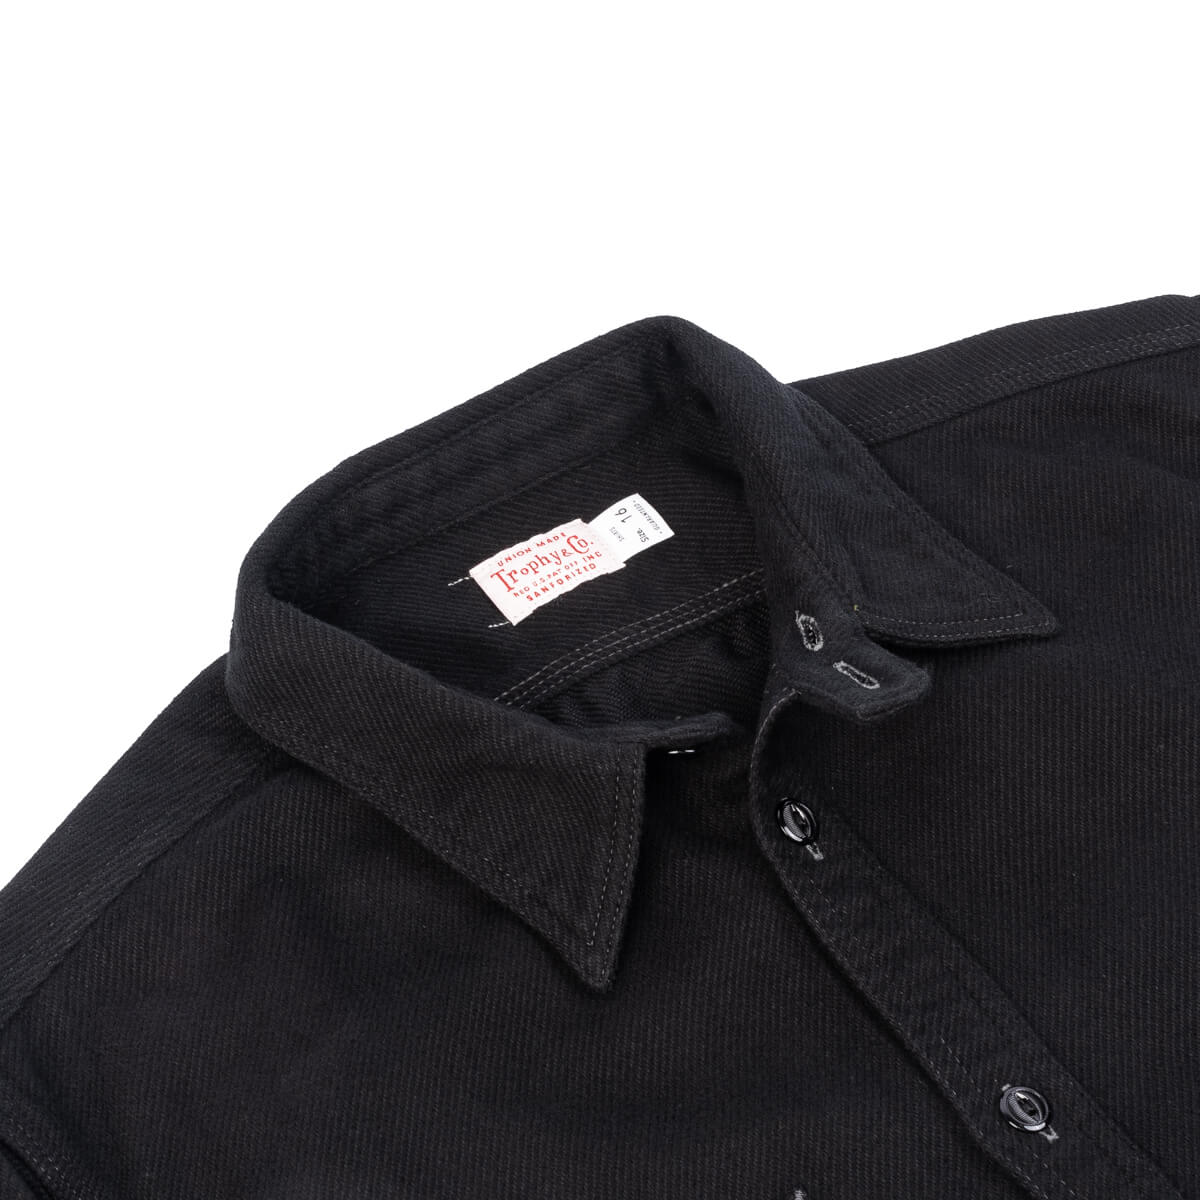 Machine Age Flannel Shirt - Black